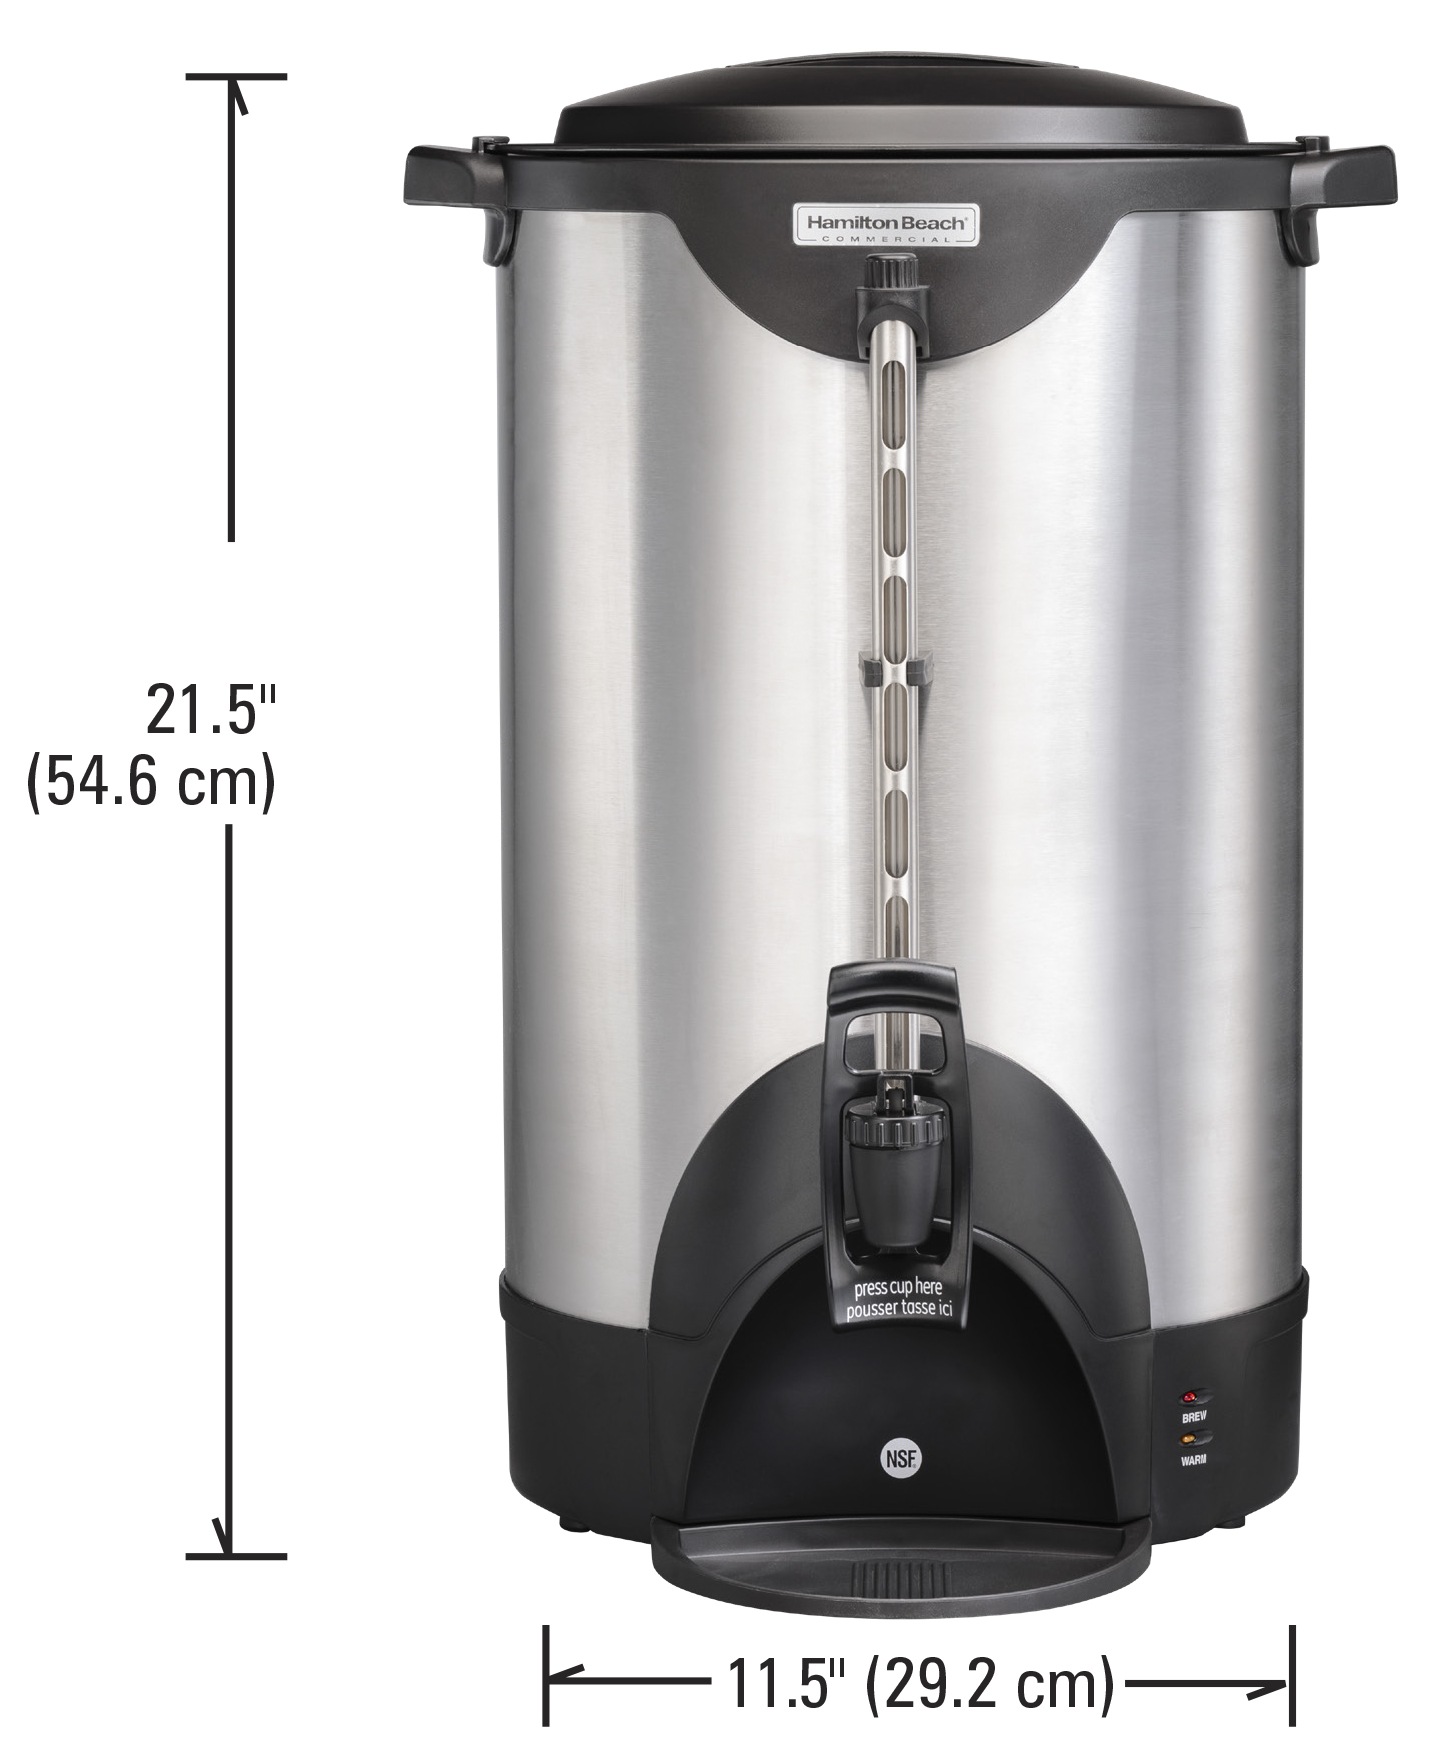 Hakka Coffee Urn 100 Cups Commercial Coffee Percolator Dispenser Fast Brew